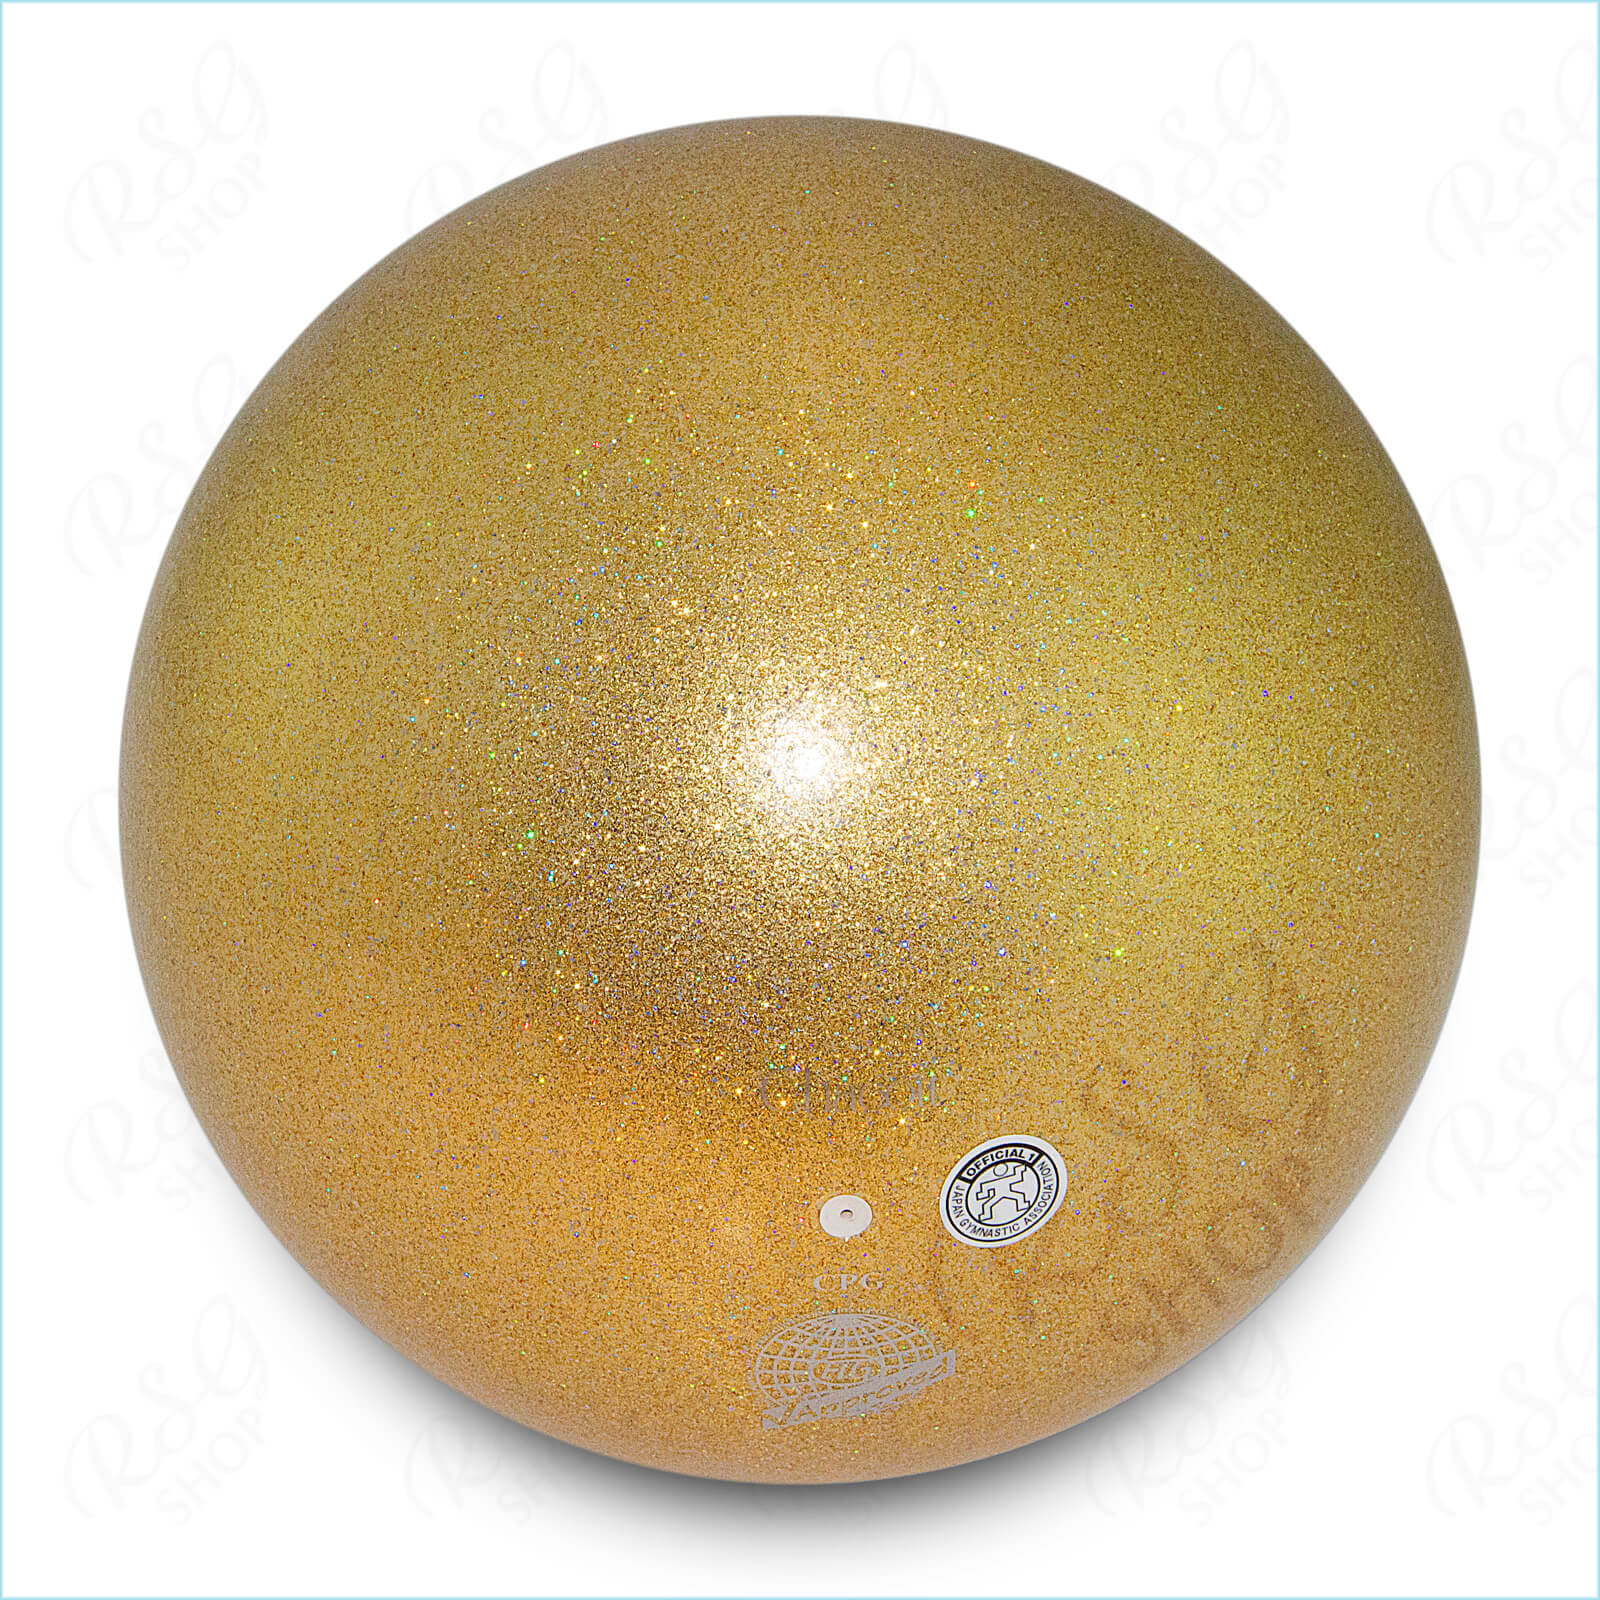 Мяч 17 см Chacott Practice Jewelry цвет Золотой (Gold) Артикул 599